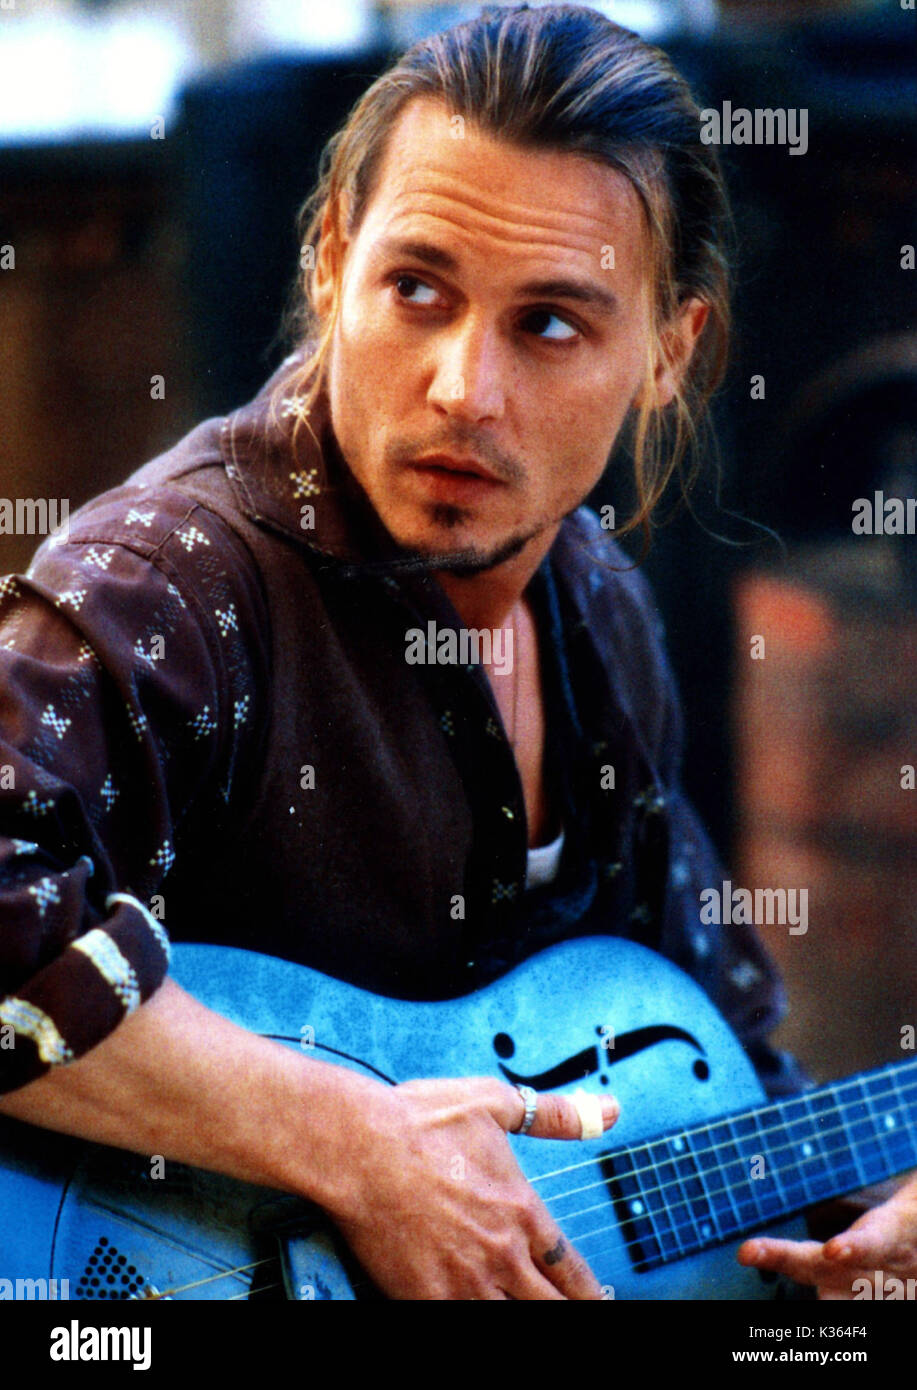 CHOCOLAT Johnny Depp Datum: 2000 Stockfotografie - Alamy